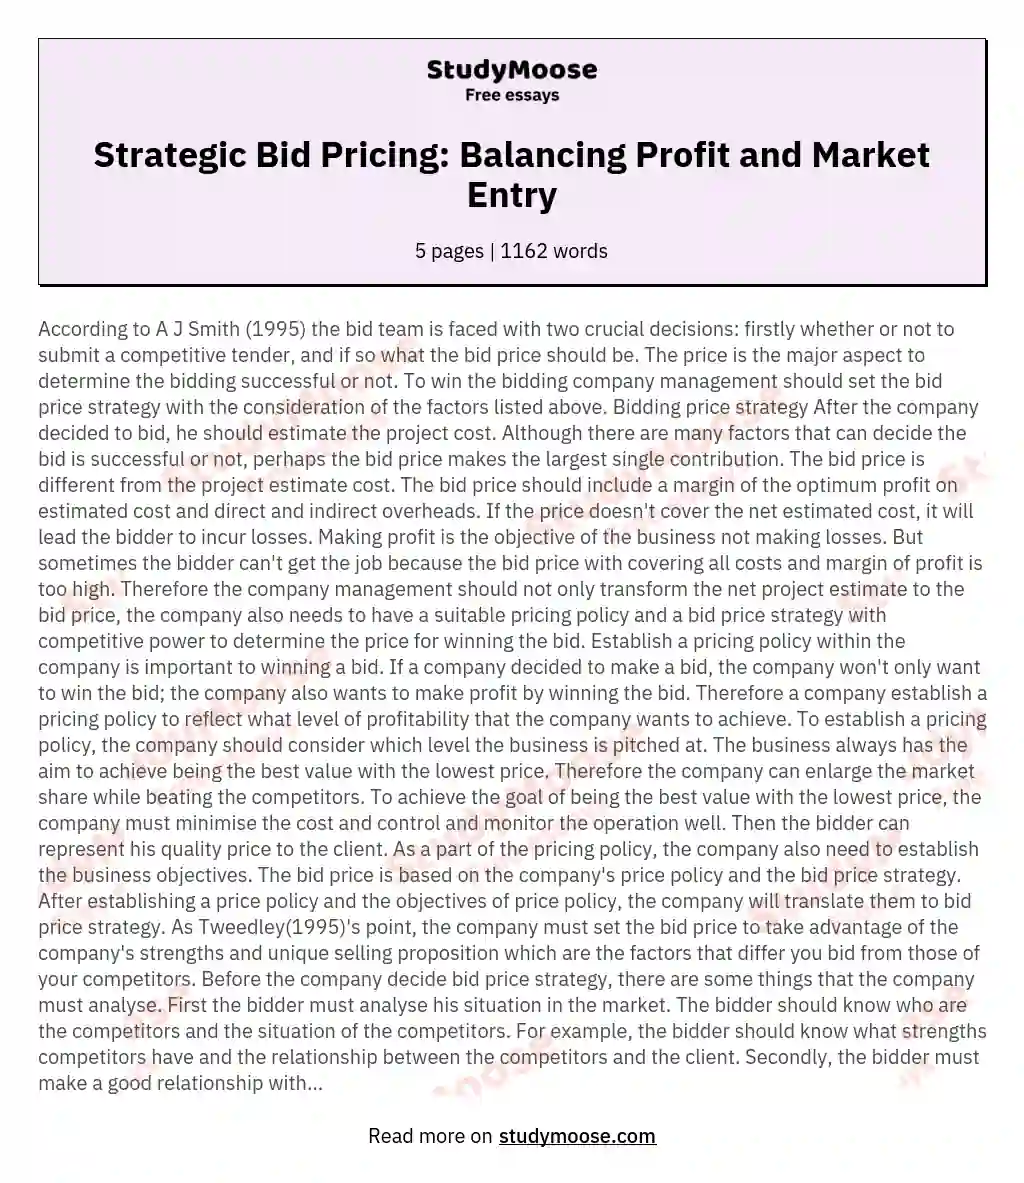 Strategic Bid Pricing: Balancing Profit and Market Entry essay